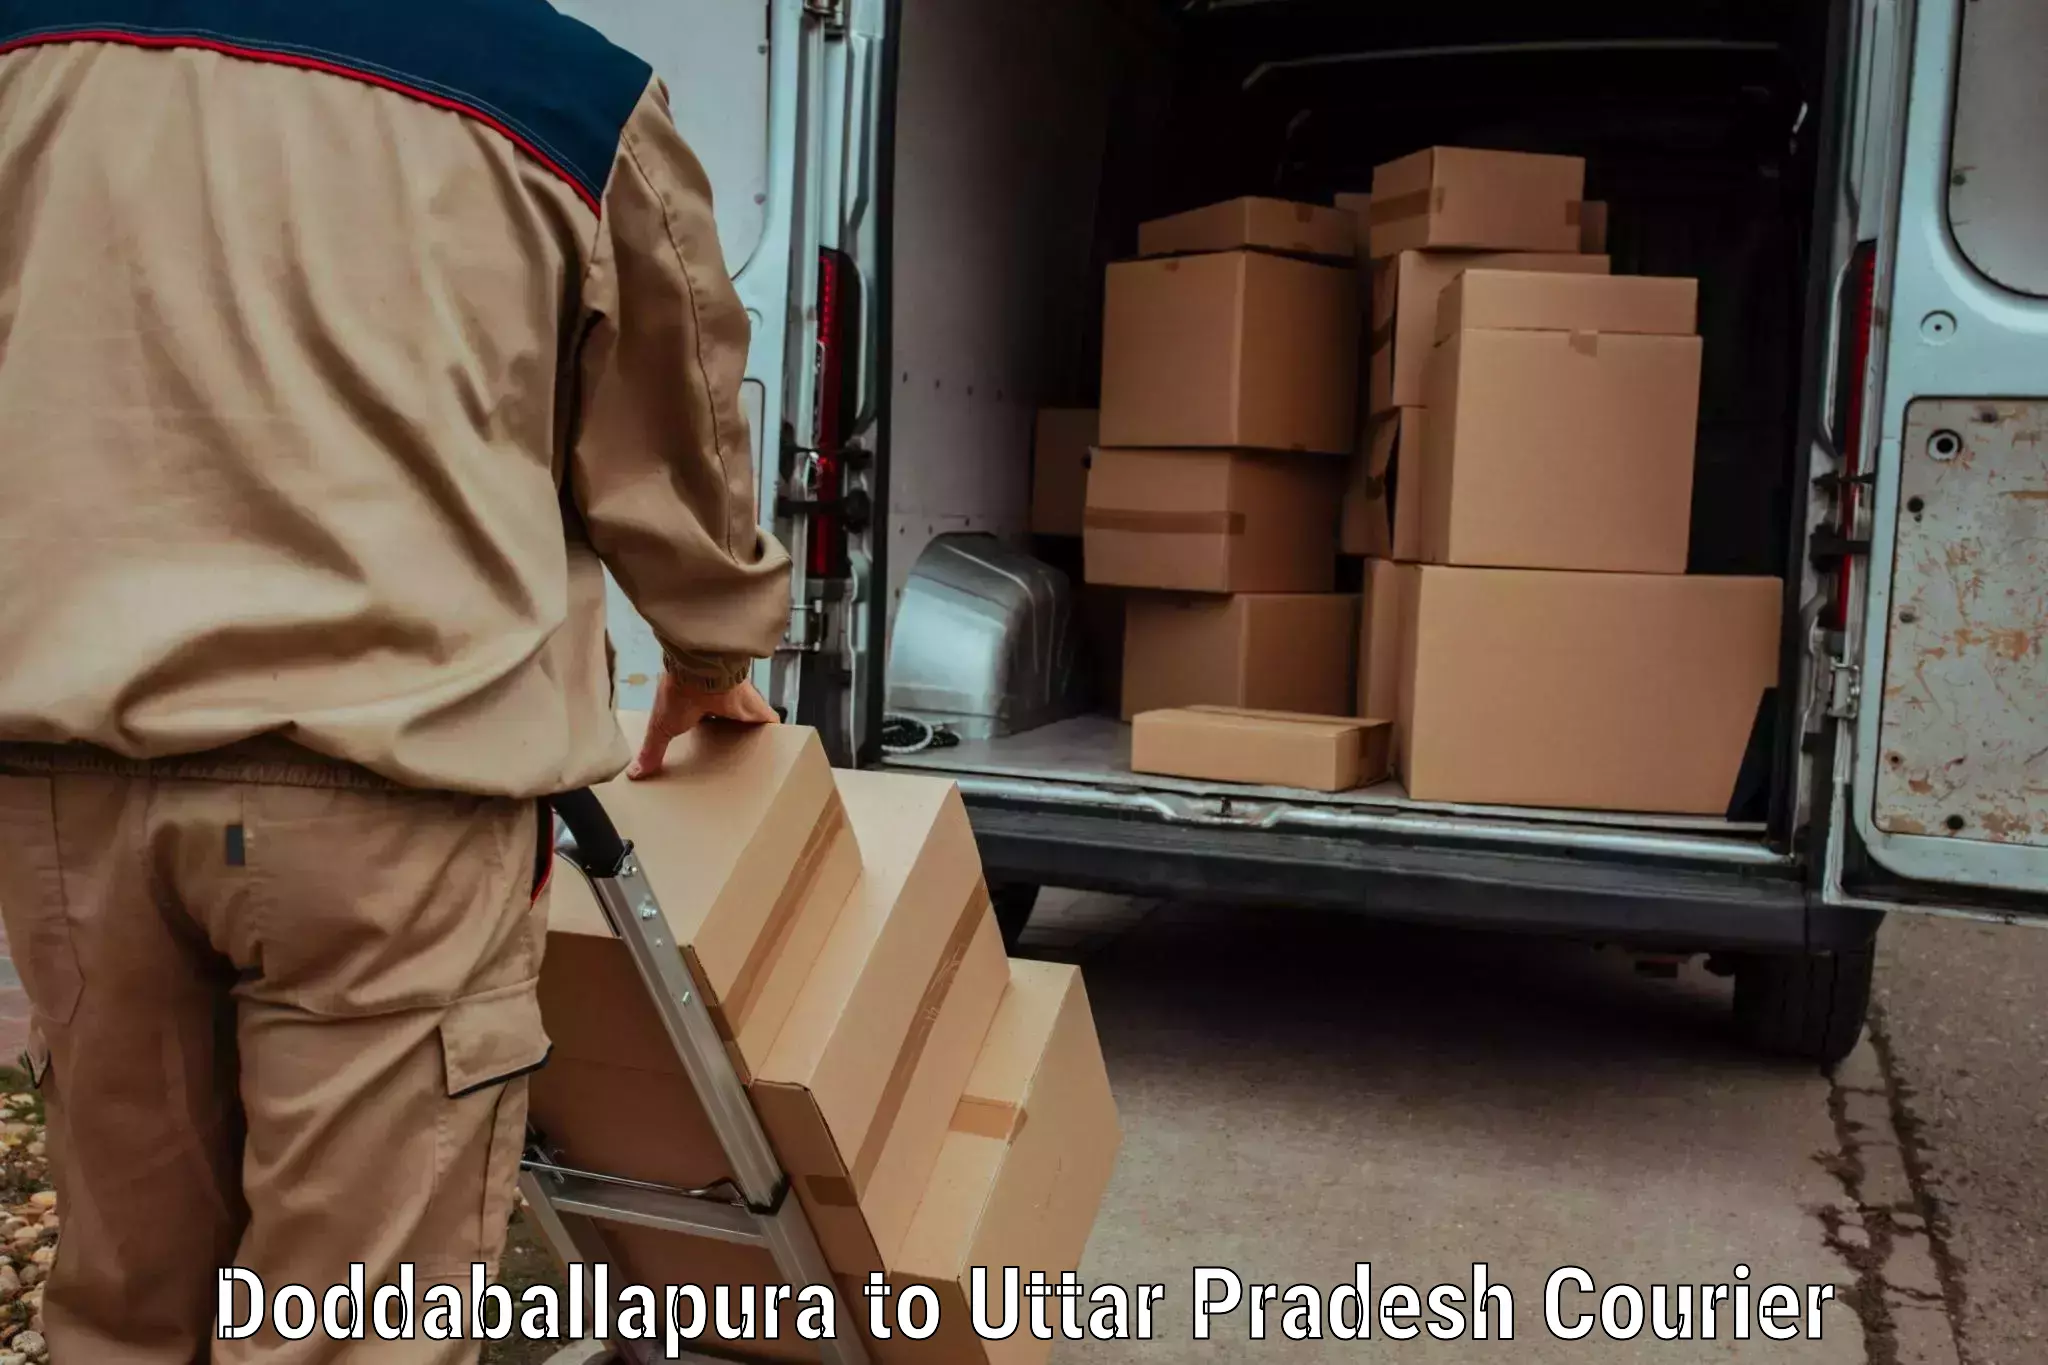 Speedy delivery service in Doddaballapura to Kairana